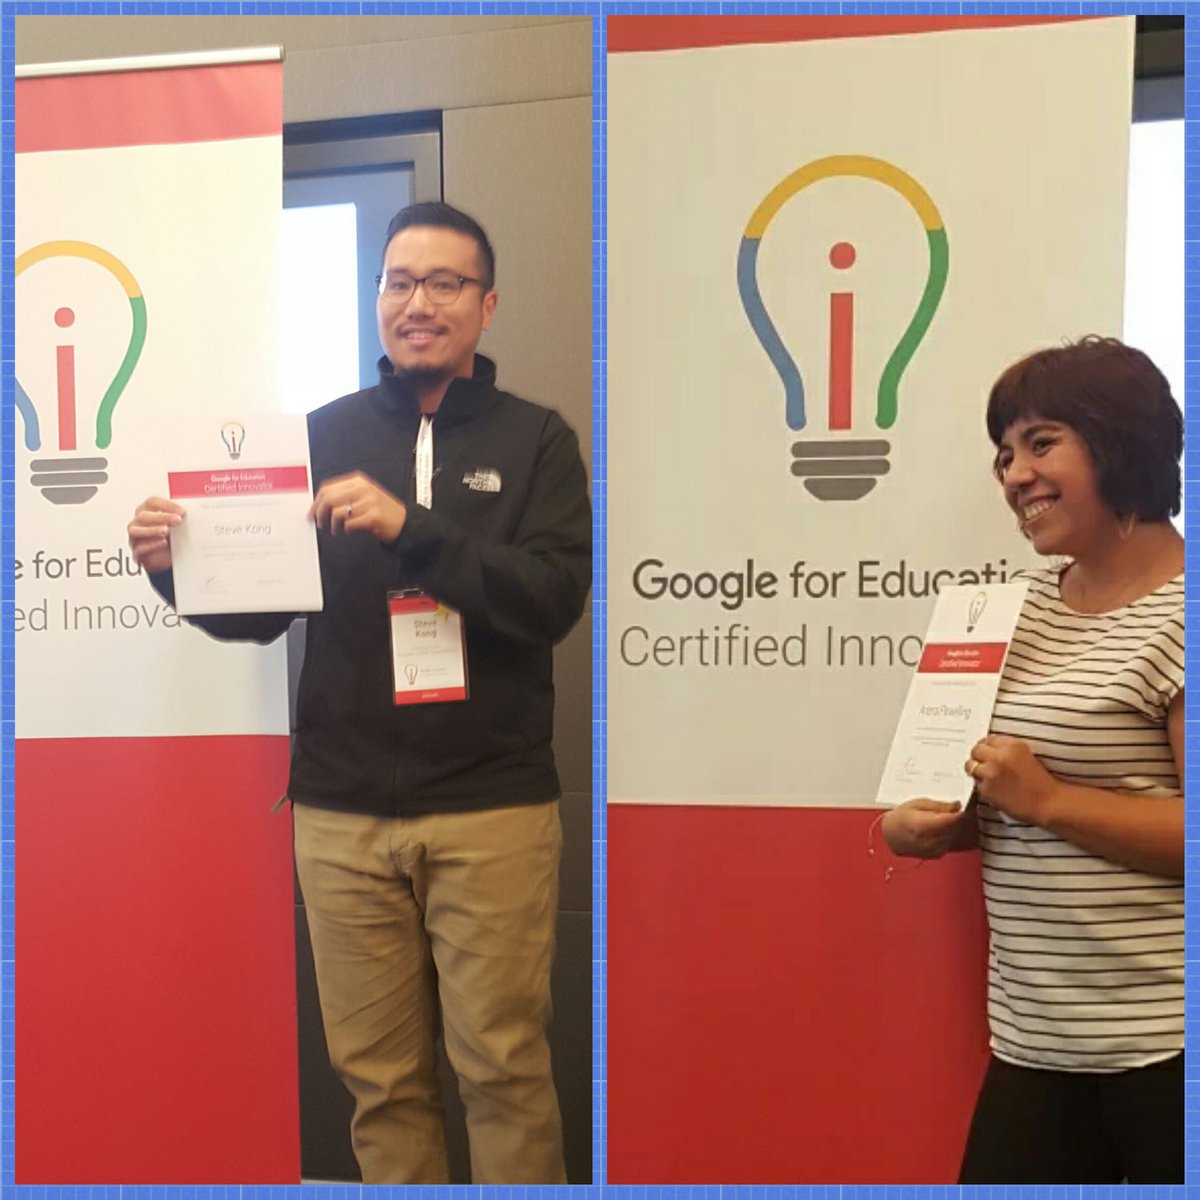 We're proud of @SKong81 & @EdTechAri now officially @GoogleForEdu Innovators #GoogleEI #MTV16 #RUSDLearns @RUSDLink